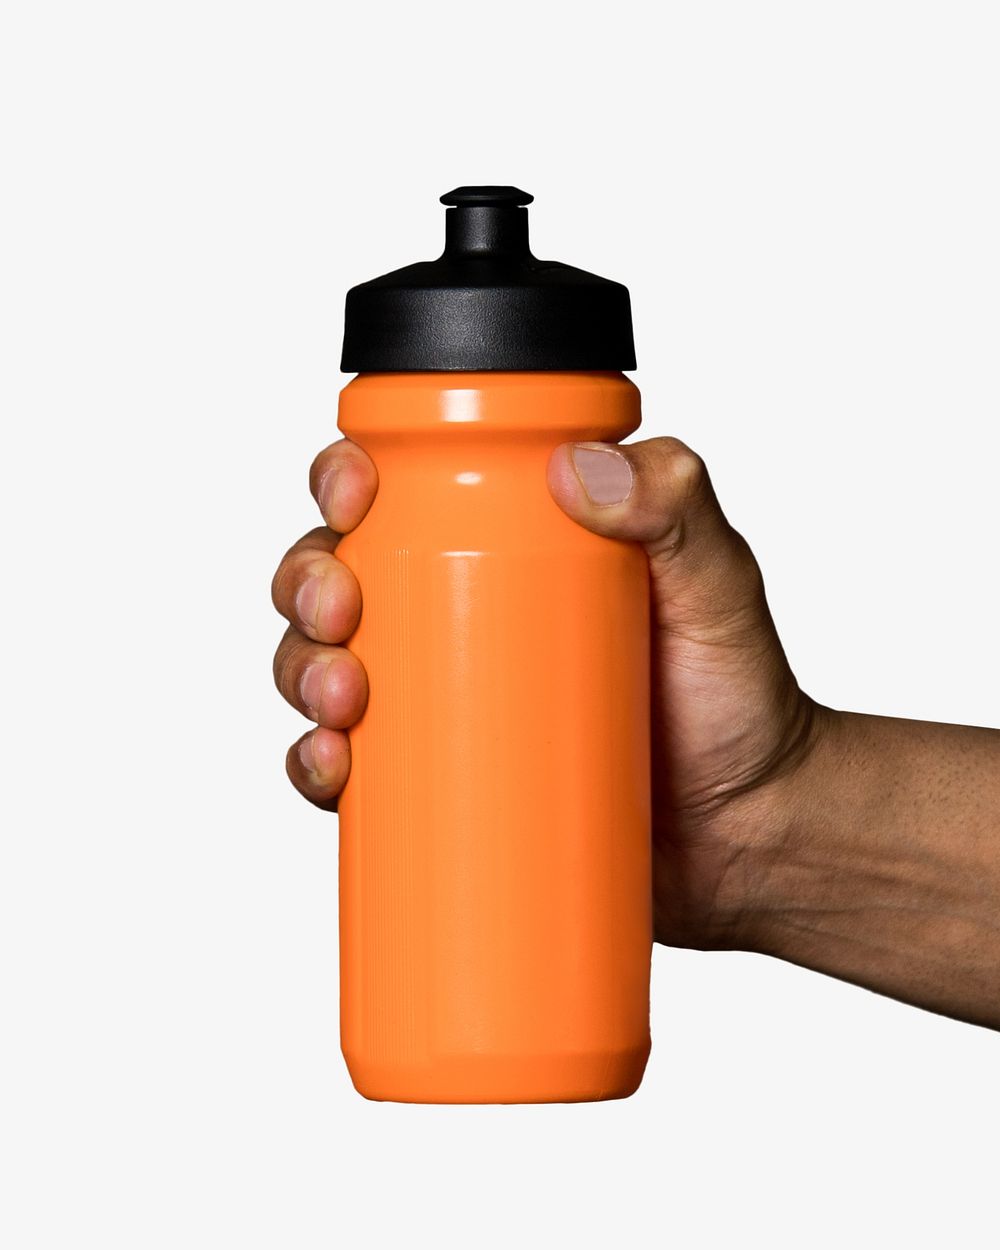 Hand holding orange water bottle